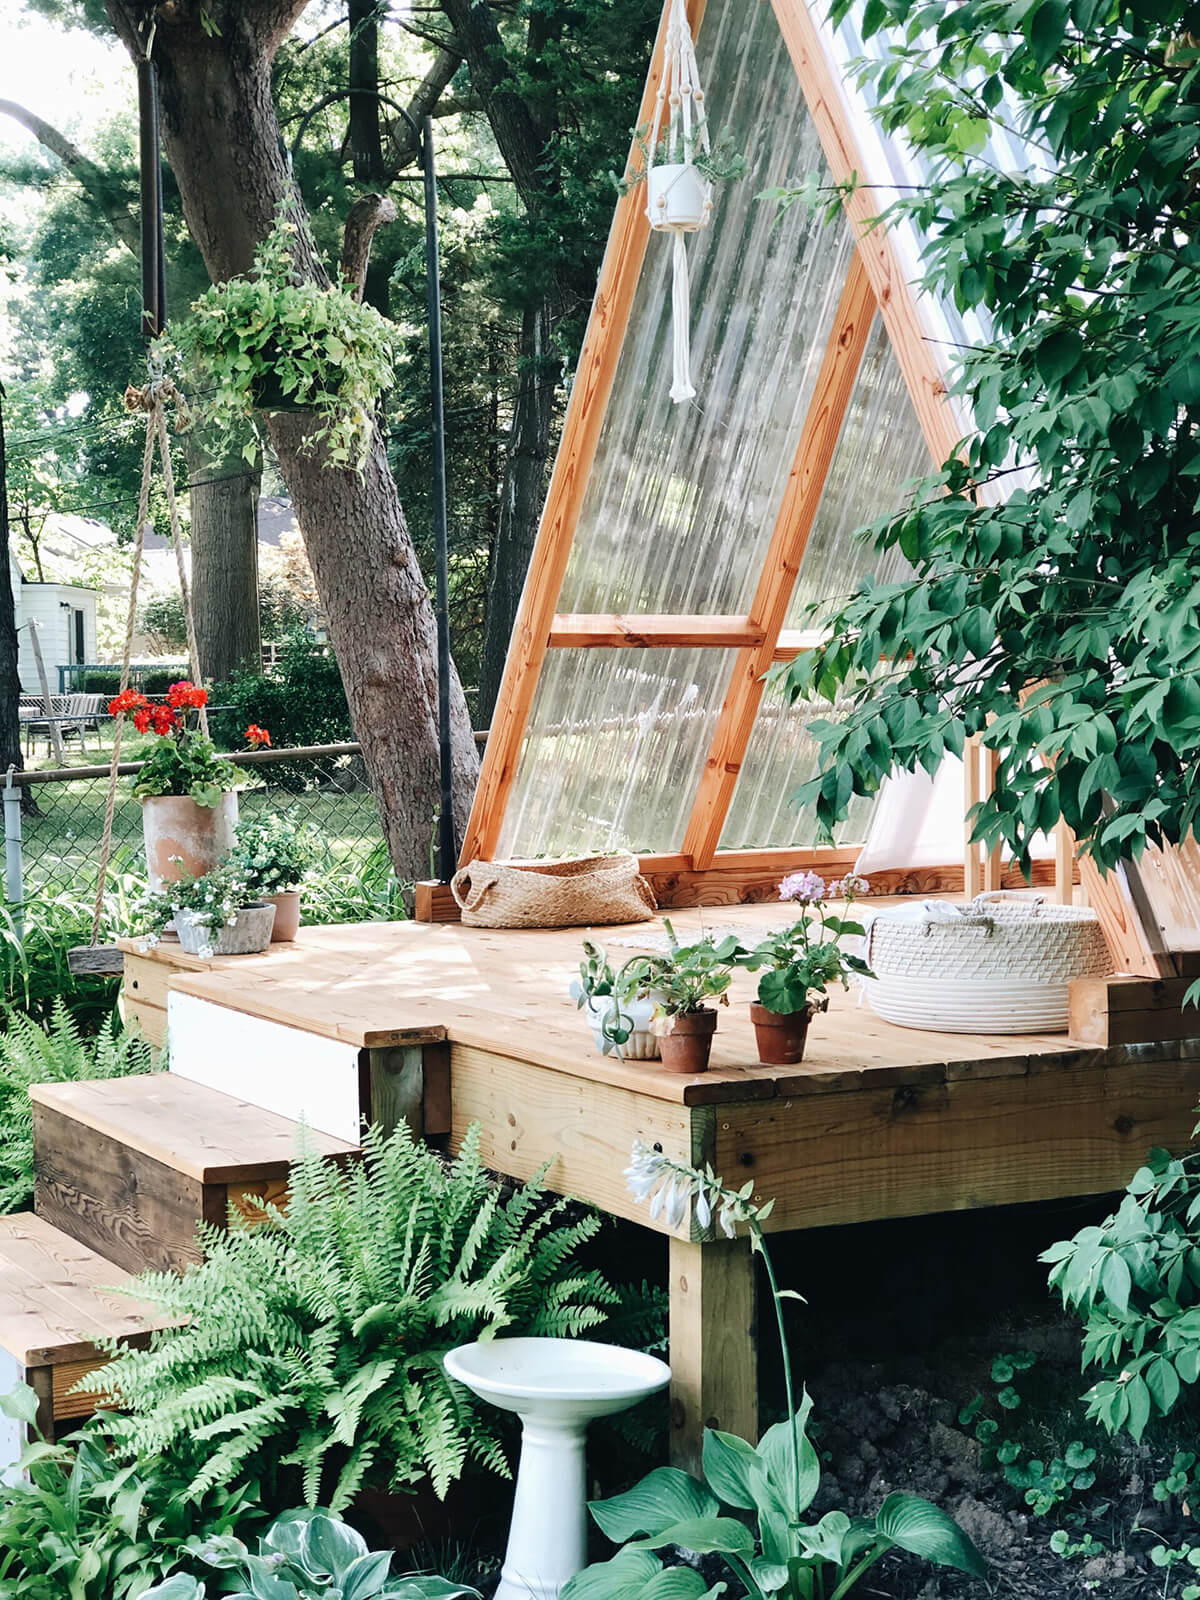 Backyard Zen Garden / How To Make A Zen Garden : Build your own zen